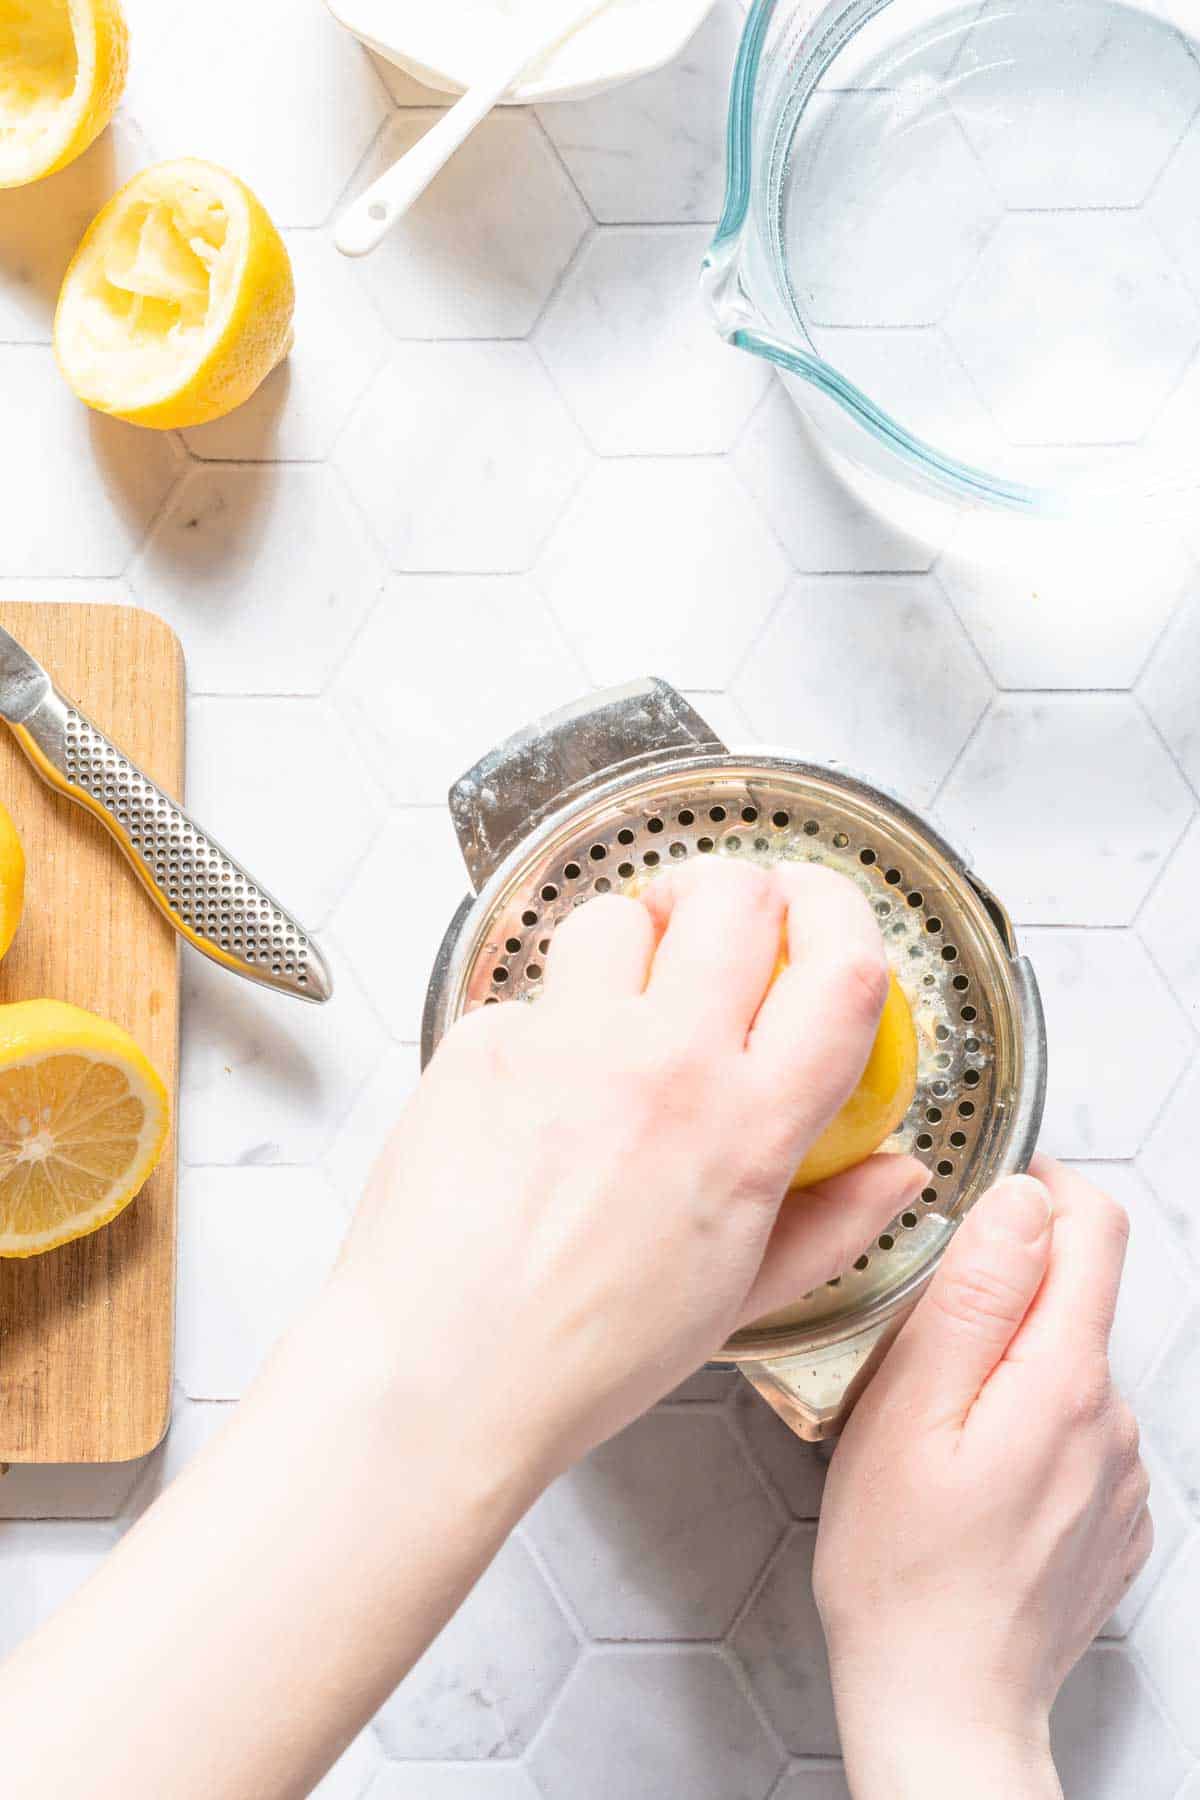 lemon being juiced with metal citrus juicer.